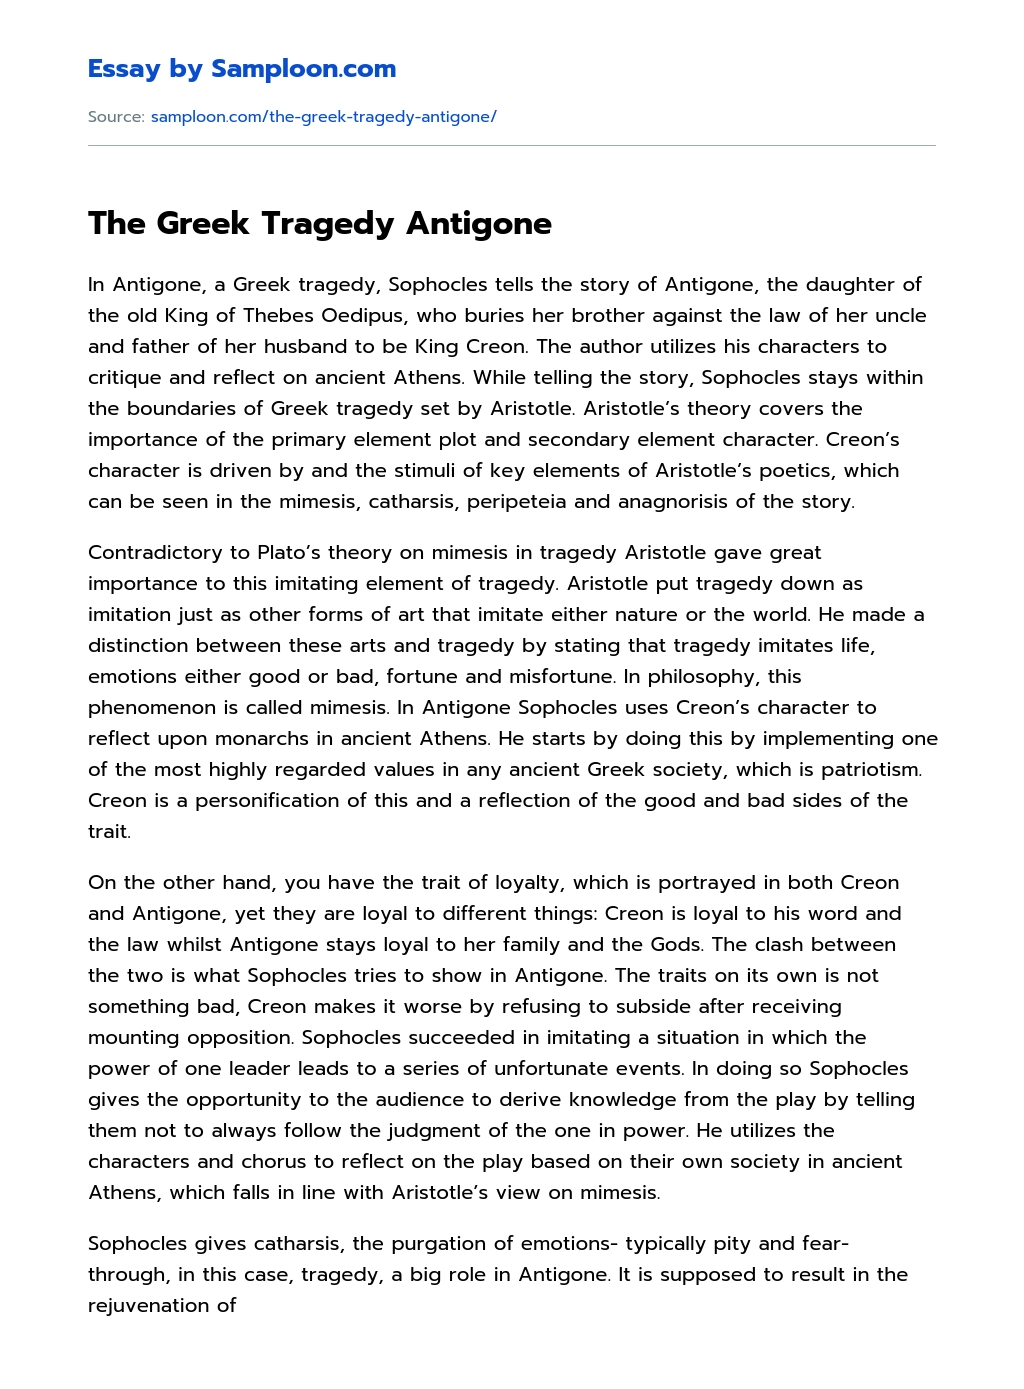 The Greek Tragedy Antigone essay